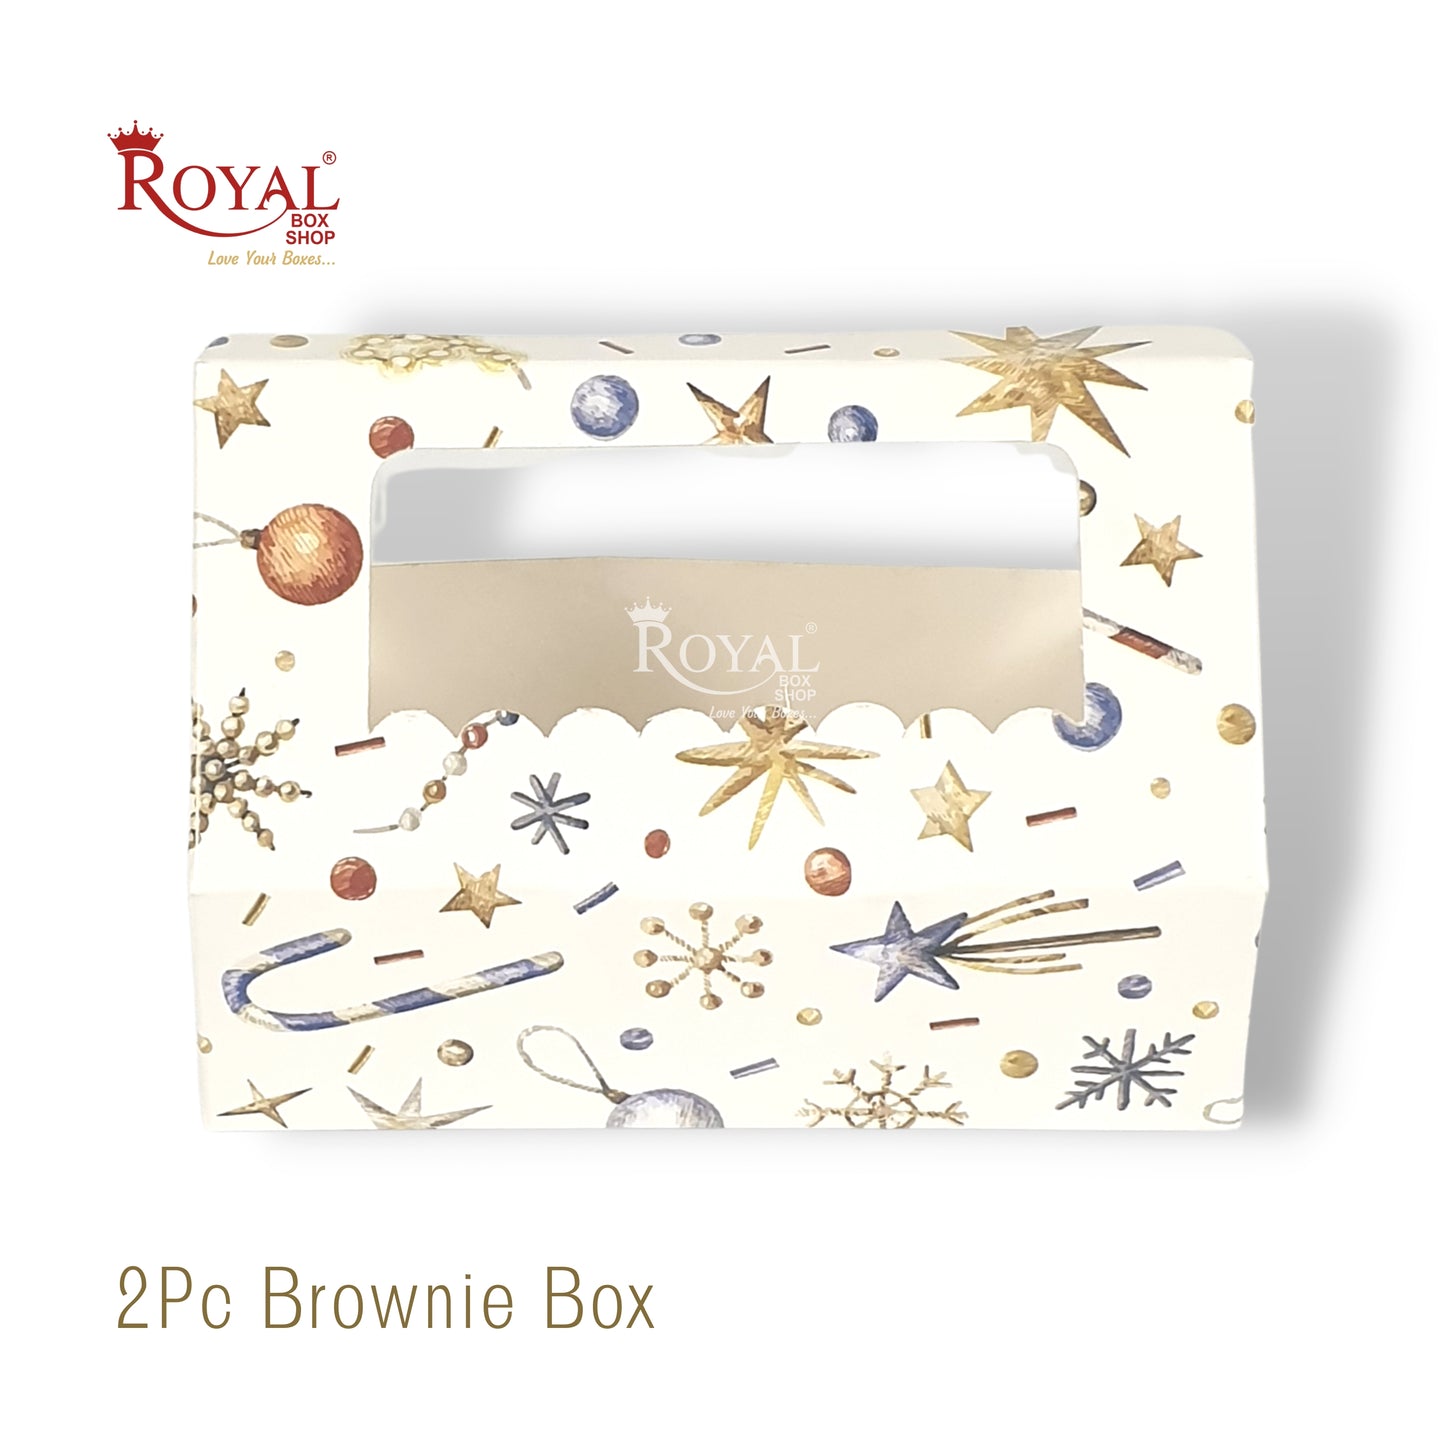 2pc Brownie Window Christmas Box I White Color I 6"x3"x1.75" inches I For Christmas, Return Favor Gifting